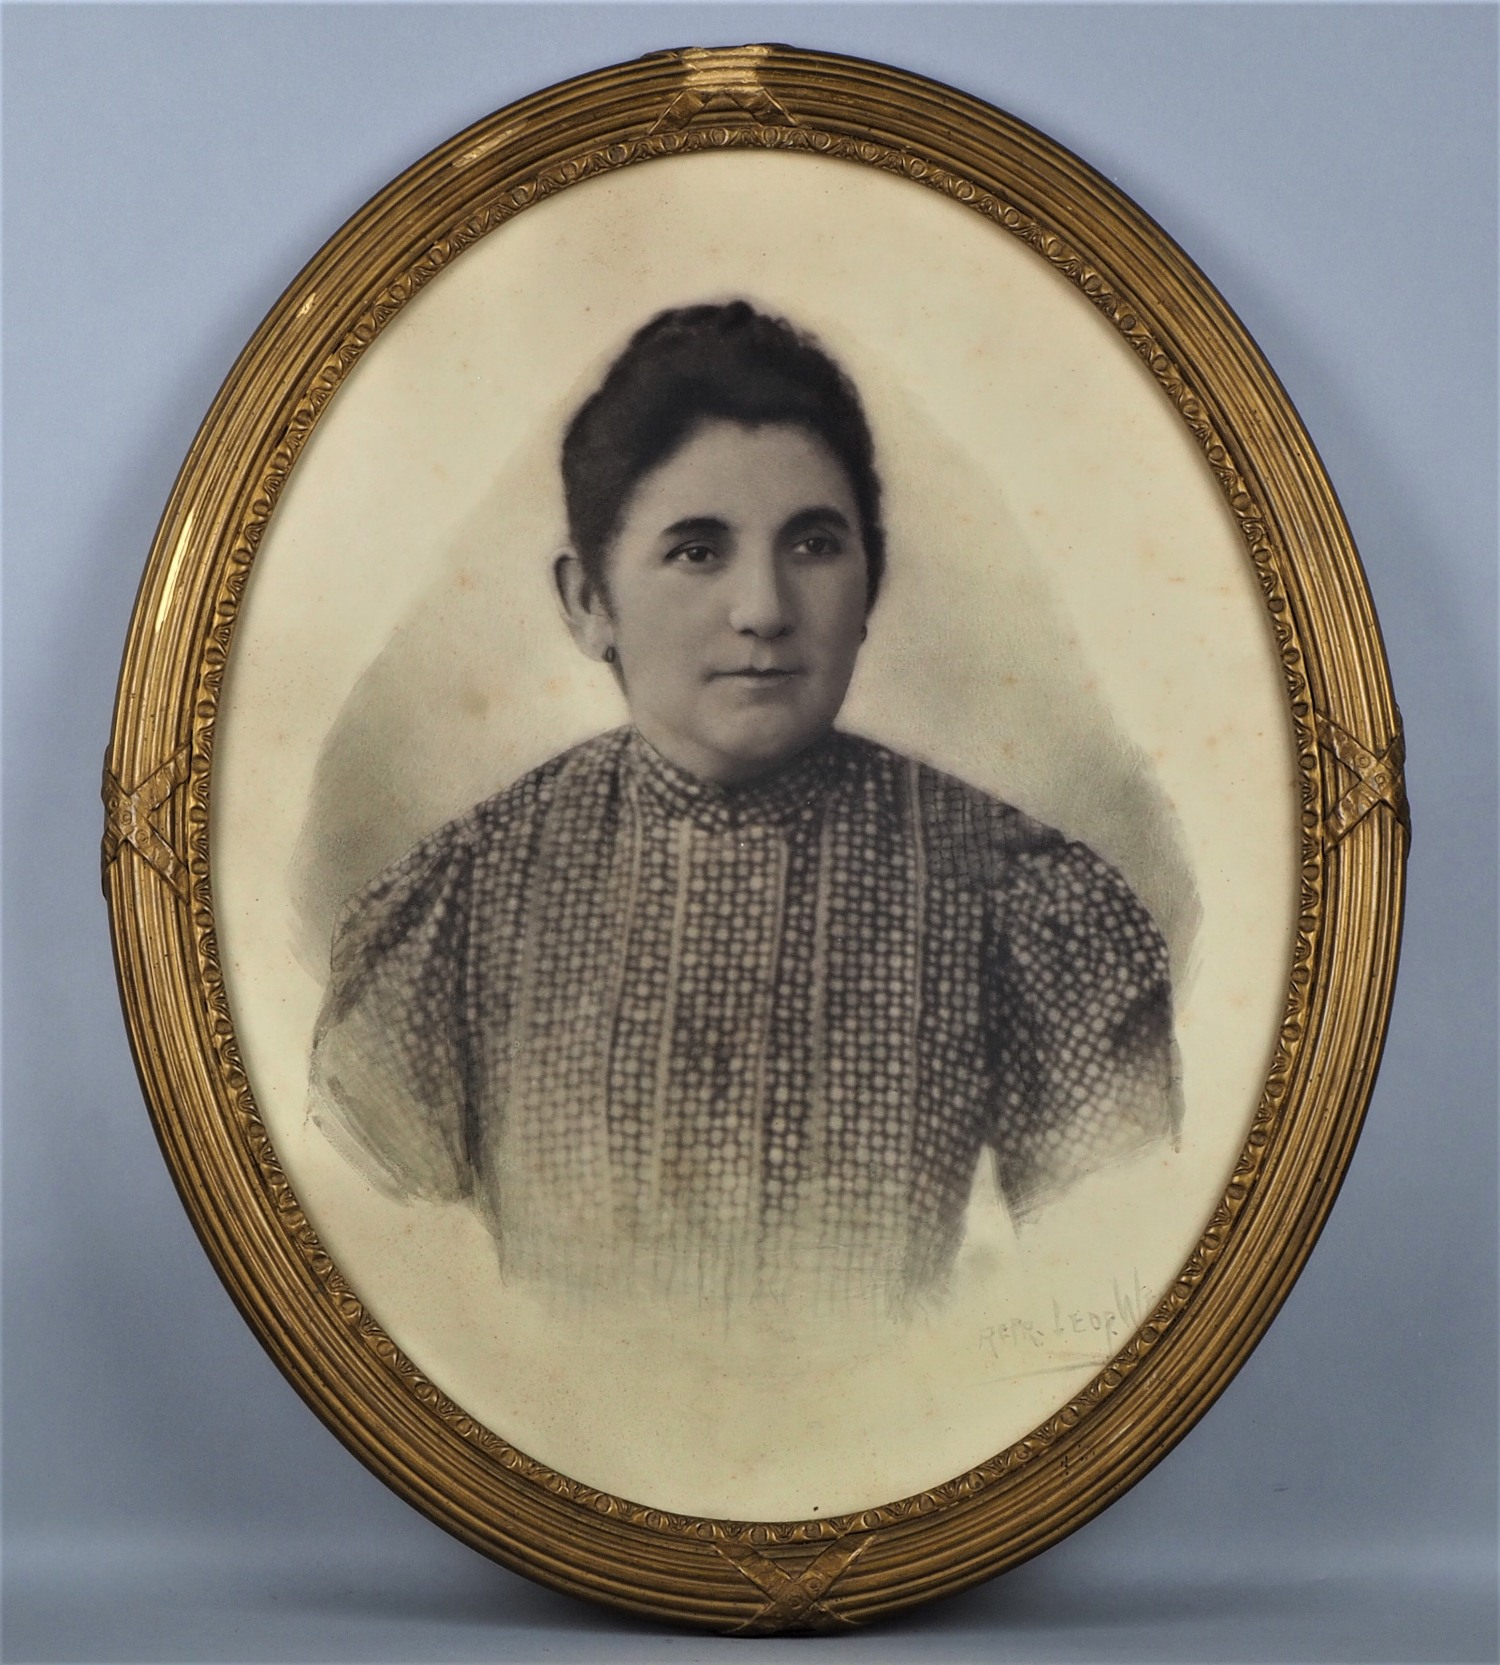 Portrait of a woman around 1900